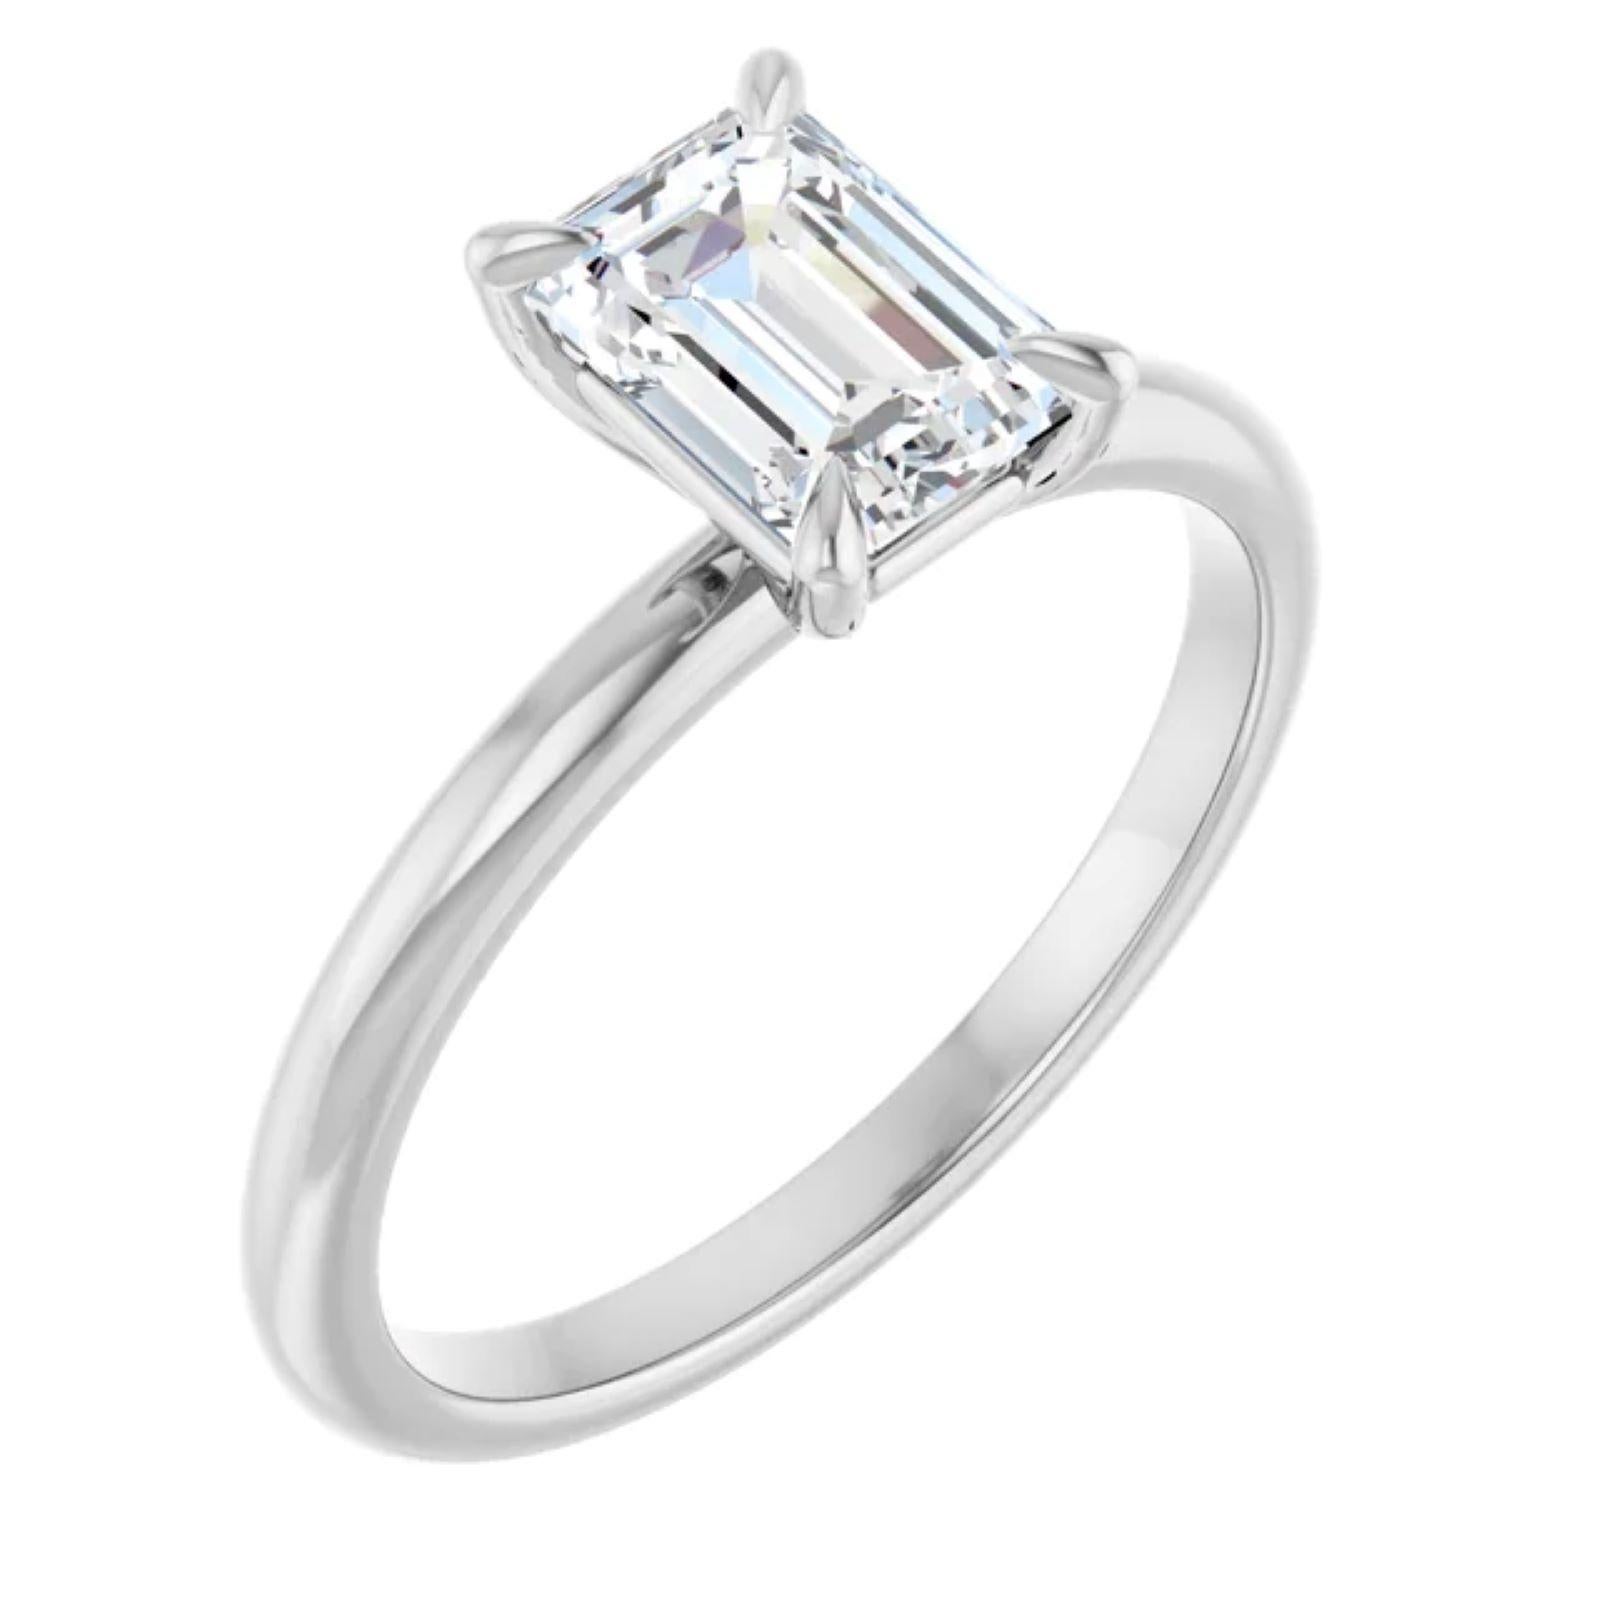 2.5 carat emerald cut engagement ring